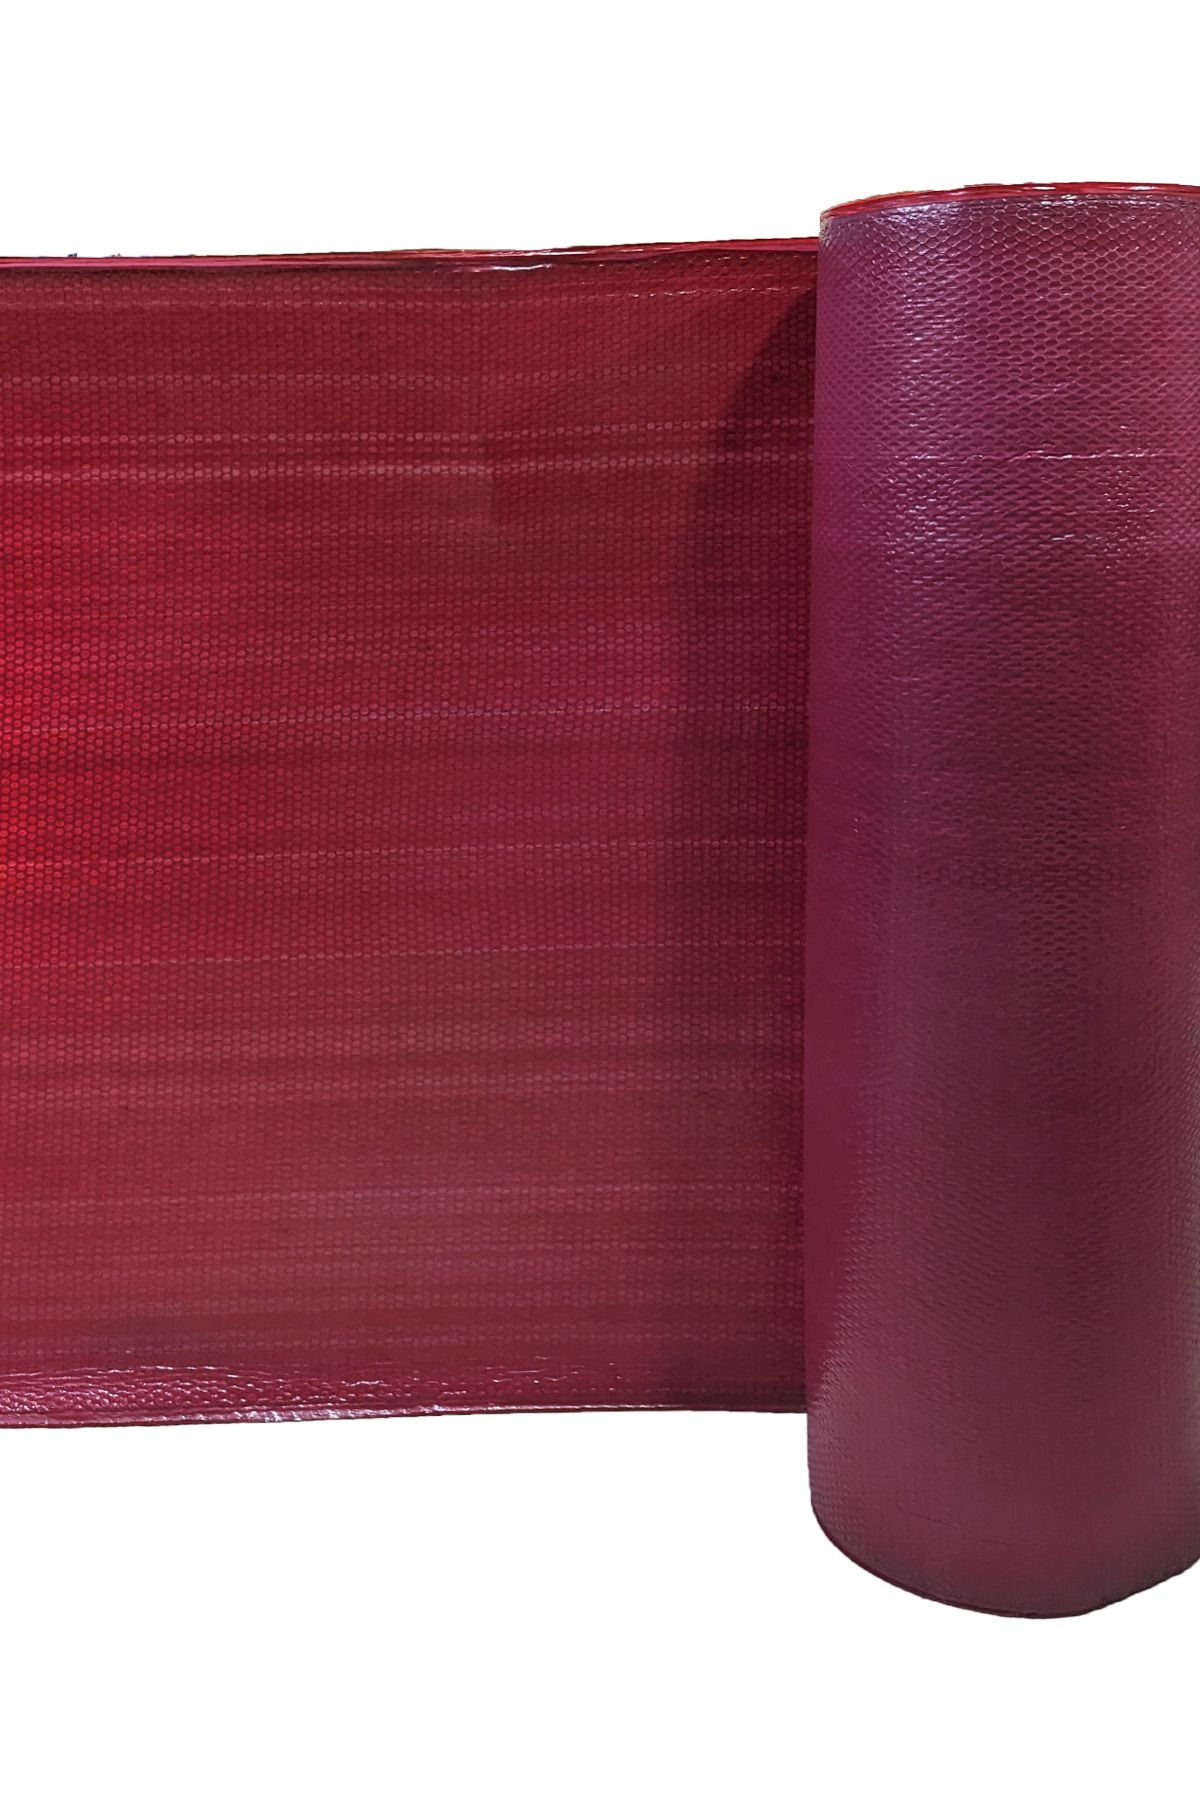 Aydınlar Ambalaj 50cmx30m 290gr Kalın Kırmızı Ambalaj Poşeti Balonlu Havalı Naylon Patpat Pıtpıt Taşınma Poşeti